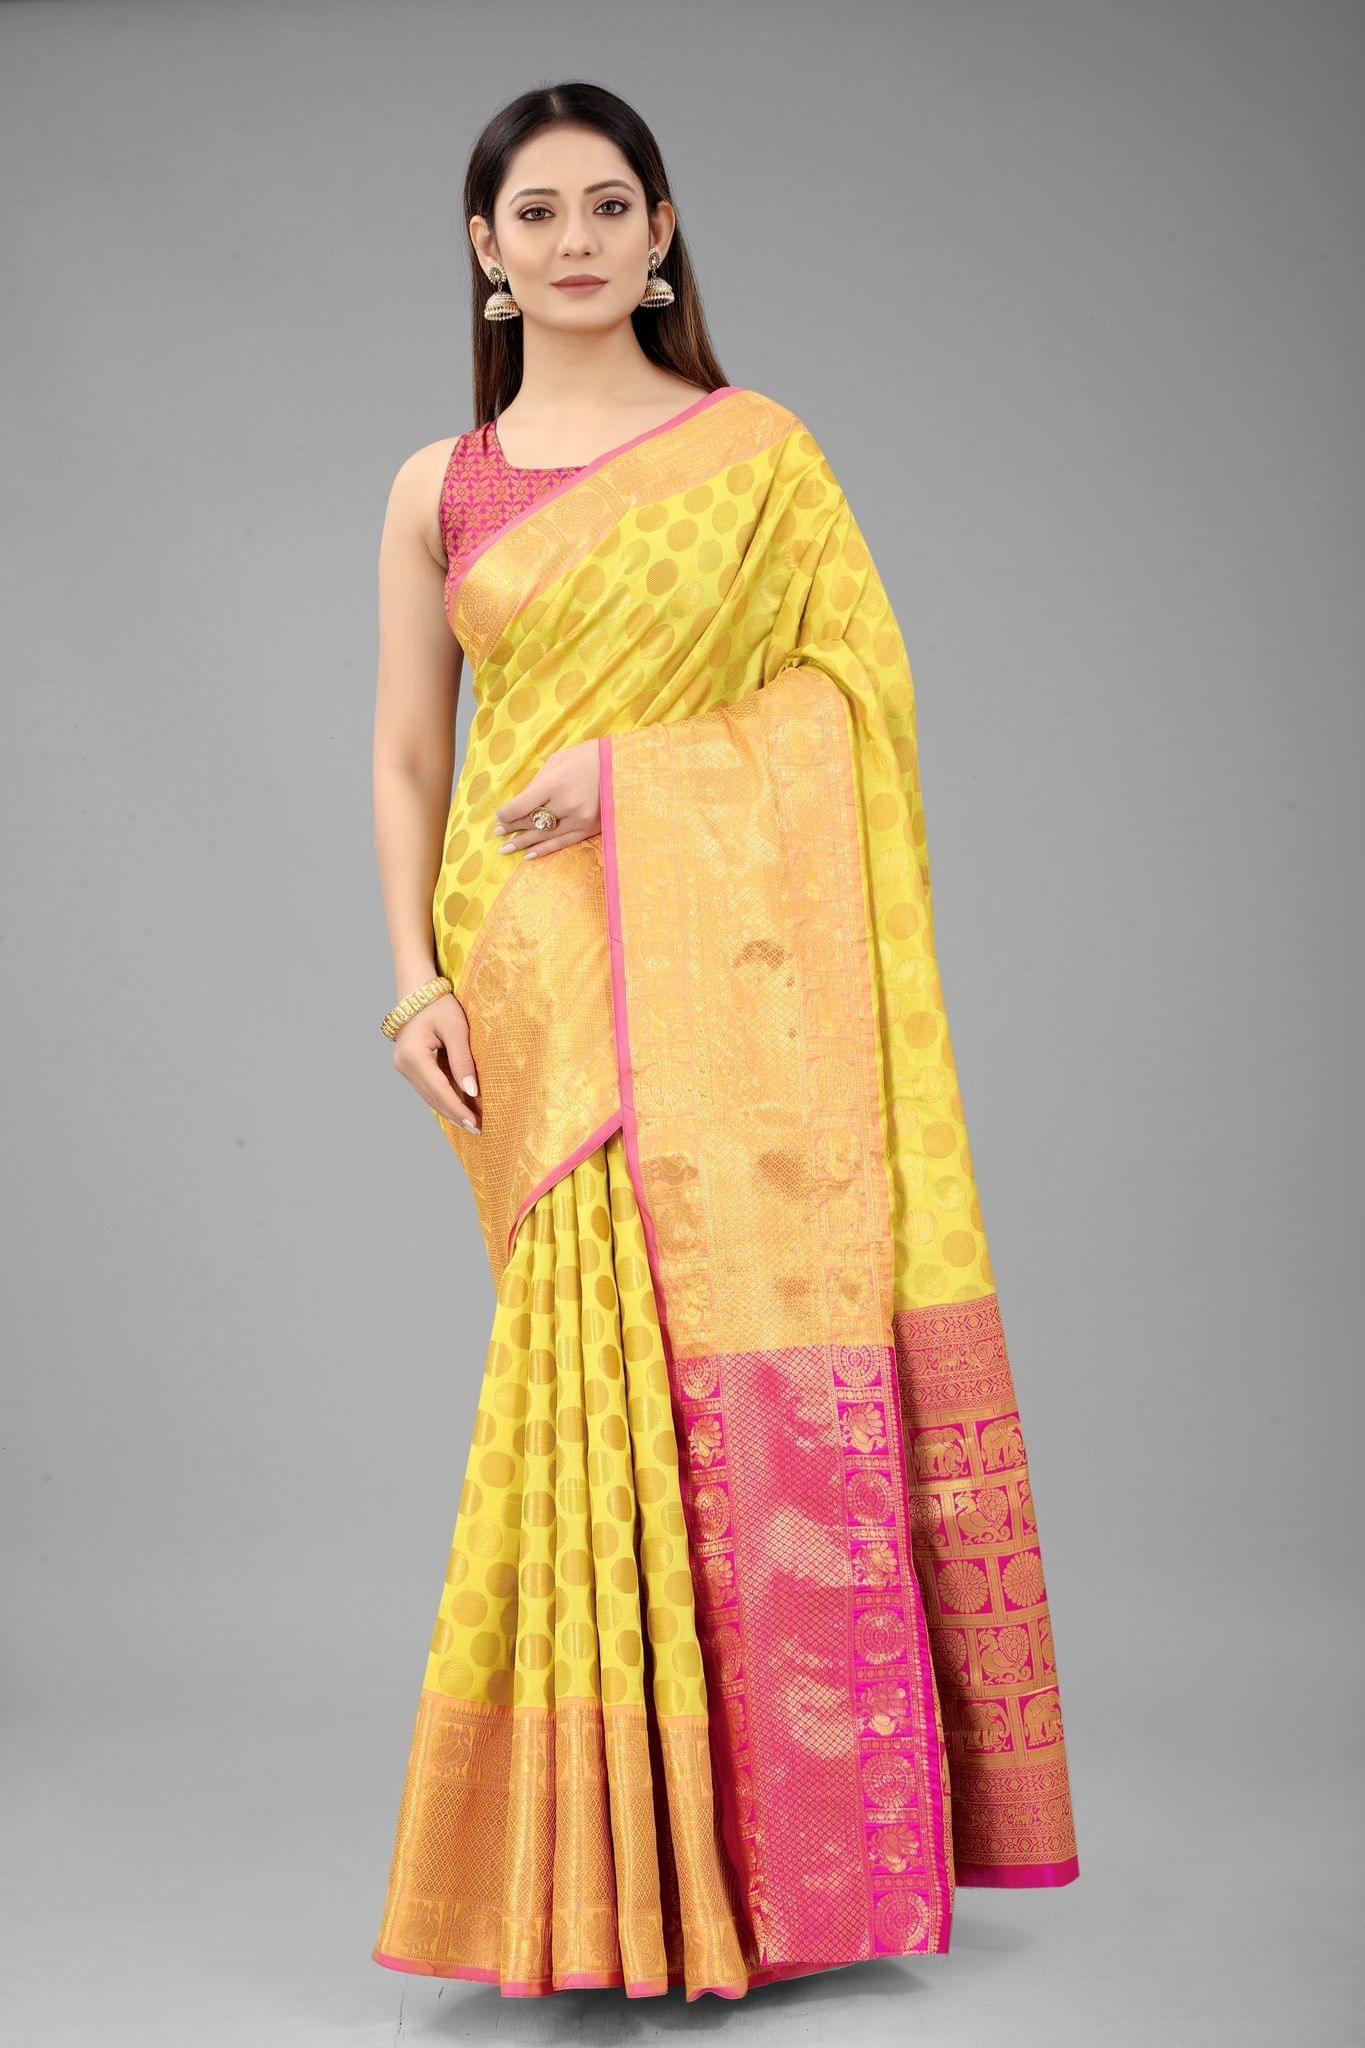 Silk Zone Women's Banarasi Silk Woven Saree With Unstiched Blouse Piece